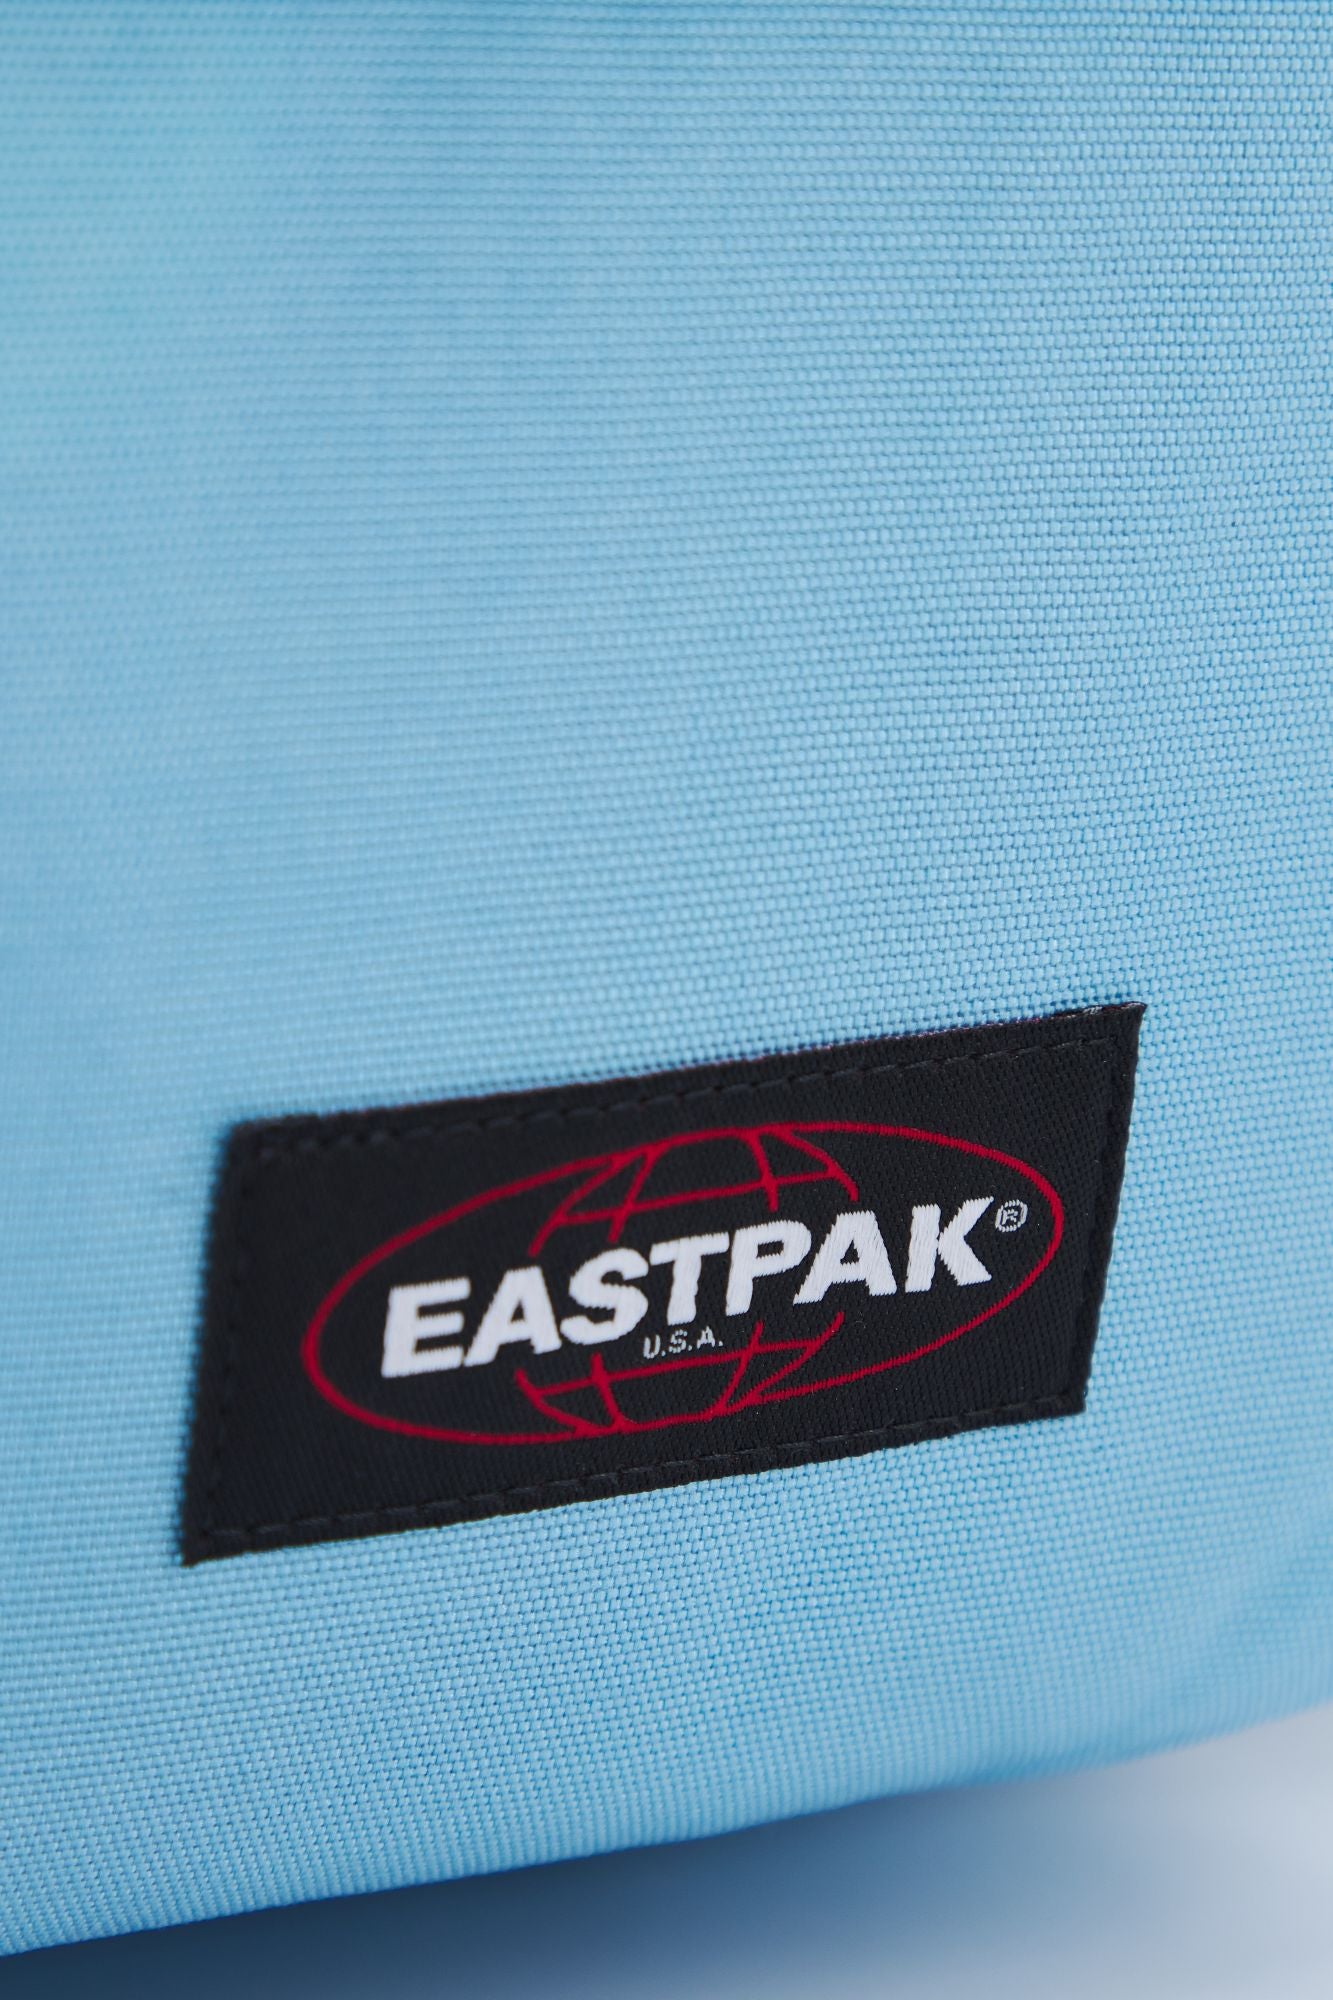 EASTPAK PADDED PAK'R en color AZUL (4)